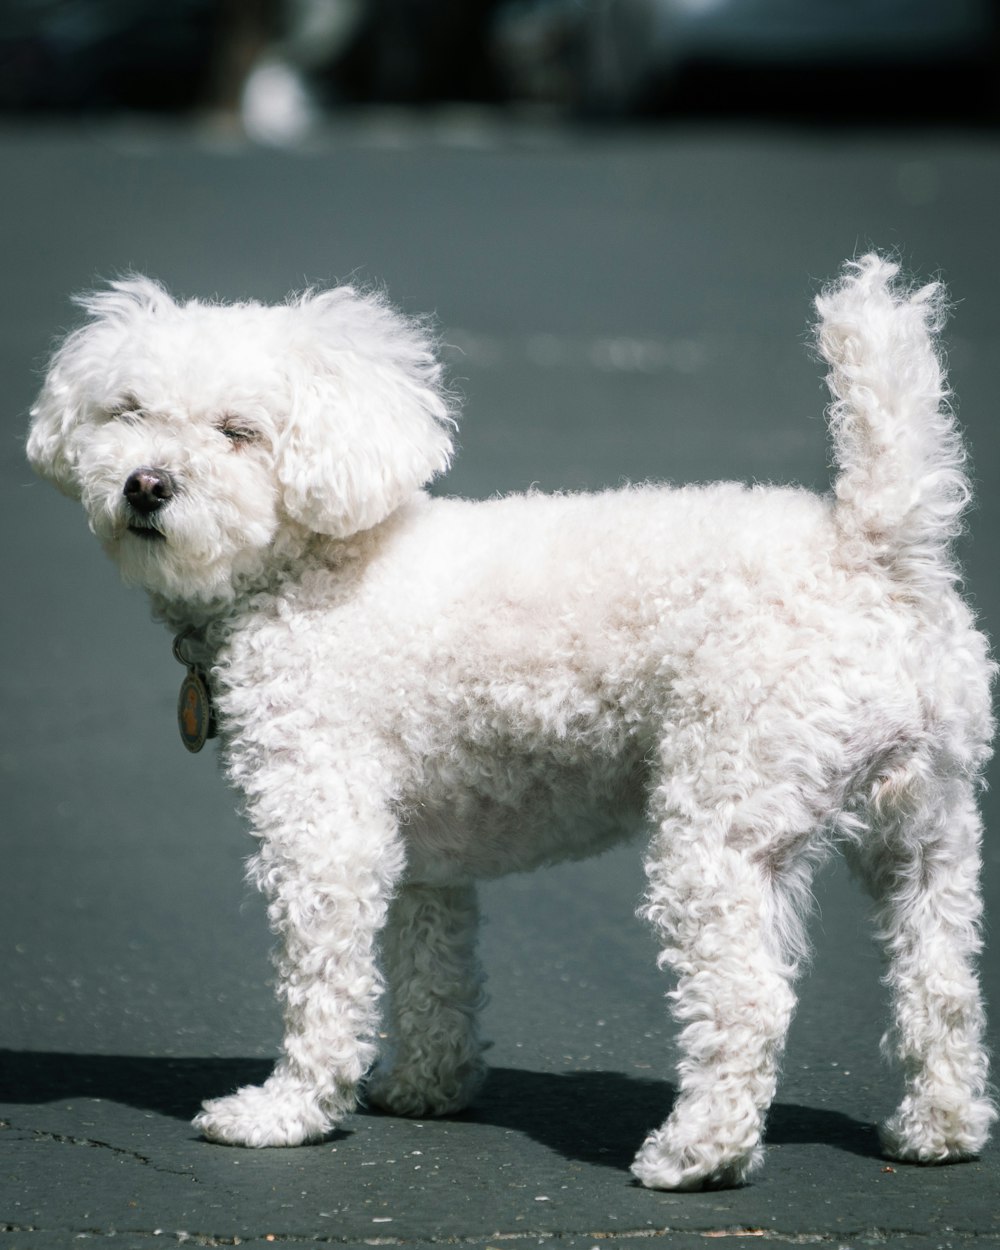 white poodle puppy on gray concrete floor